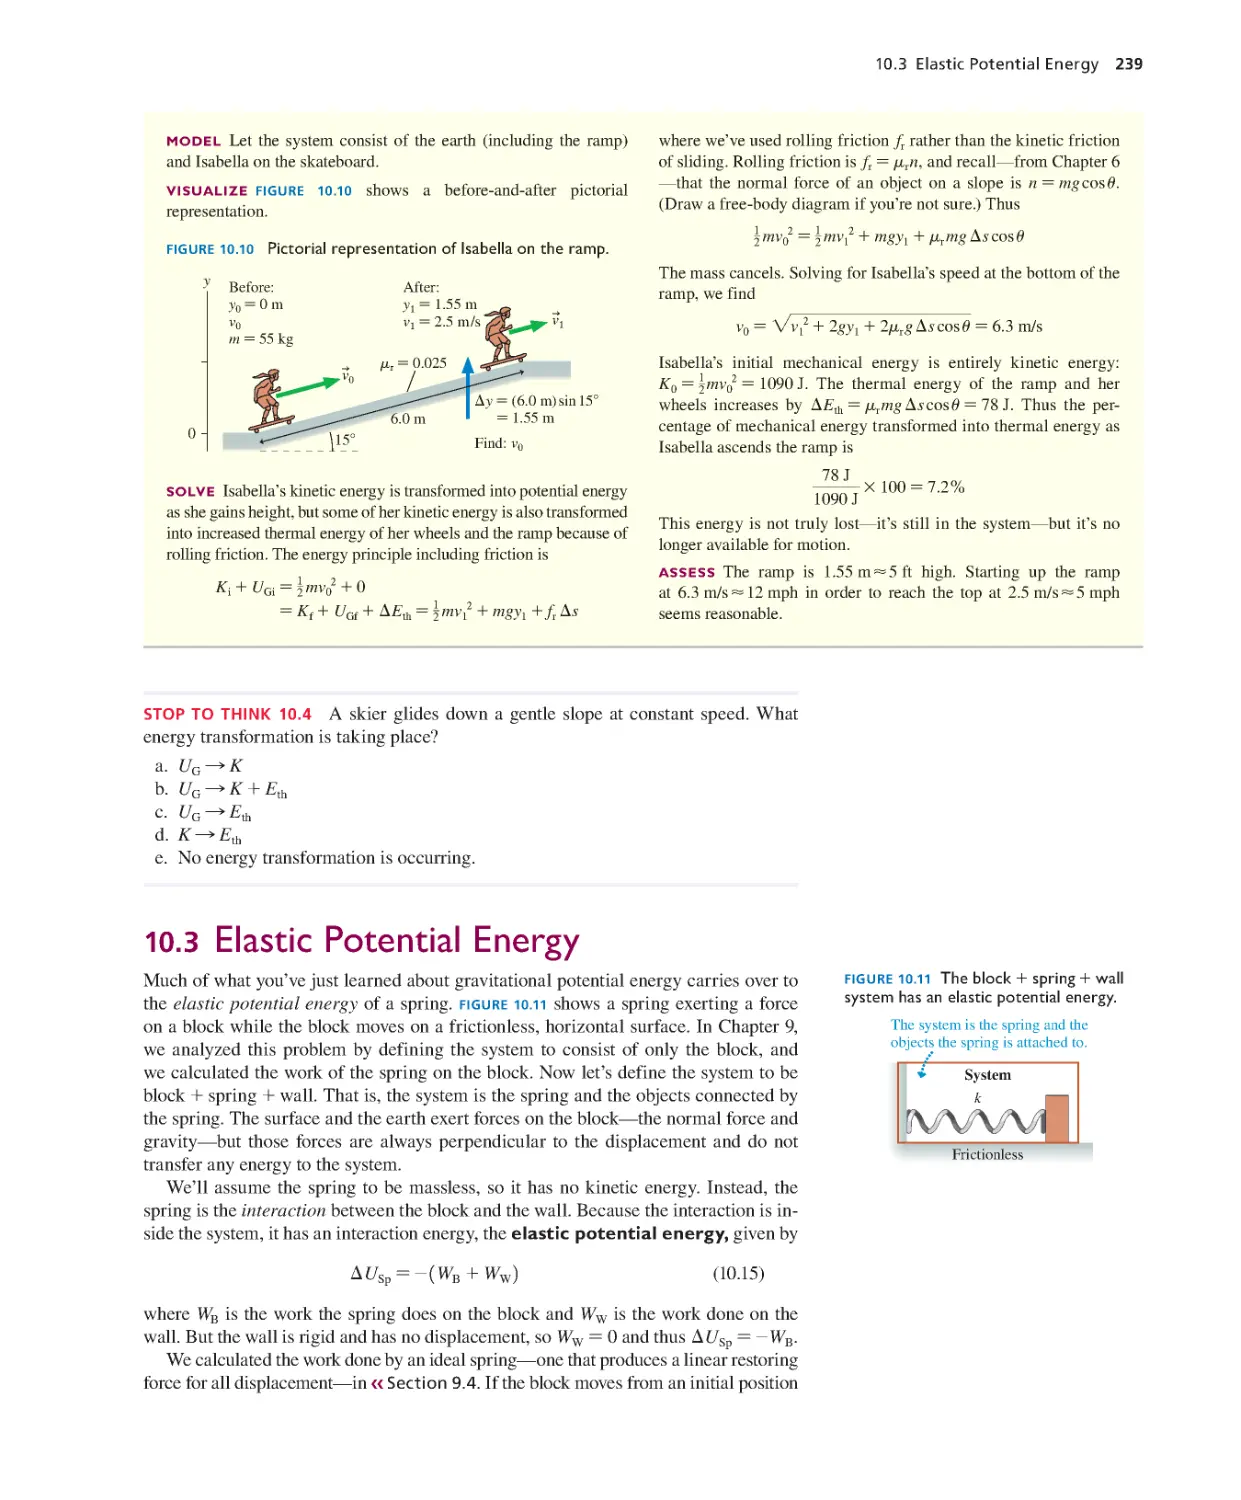 10.3. Elastic Potential Energy